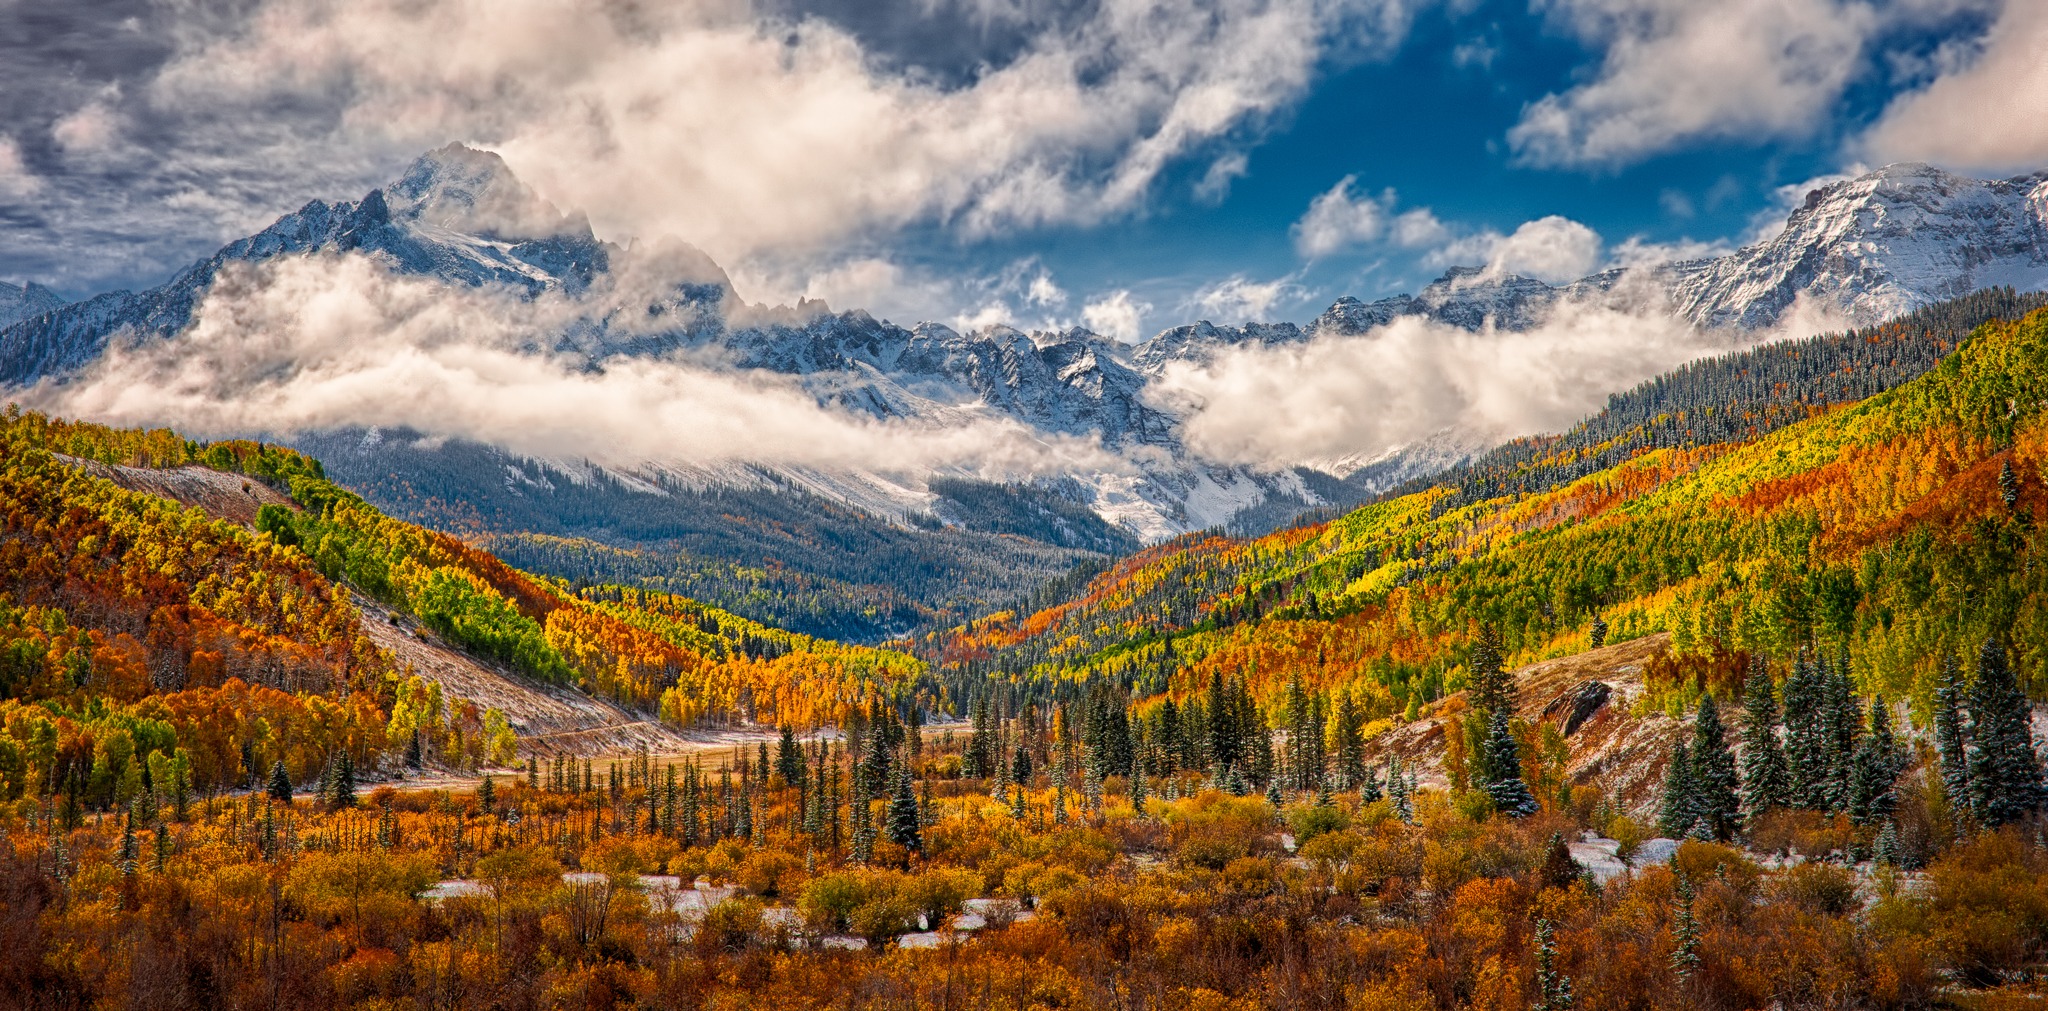 Aspens and Oak Display Blazing Autumn Colors in Colorado